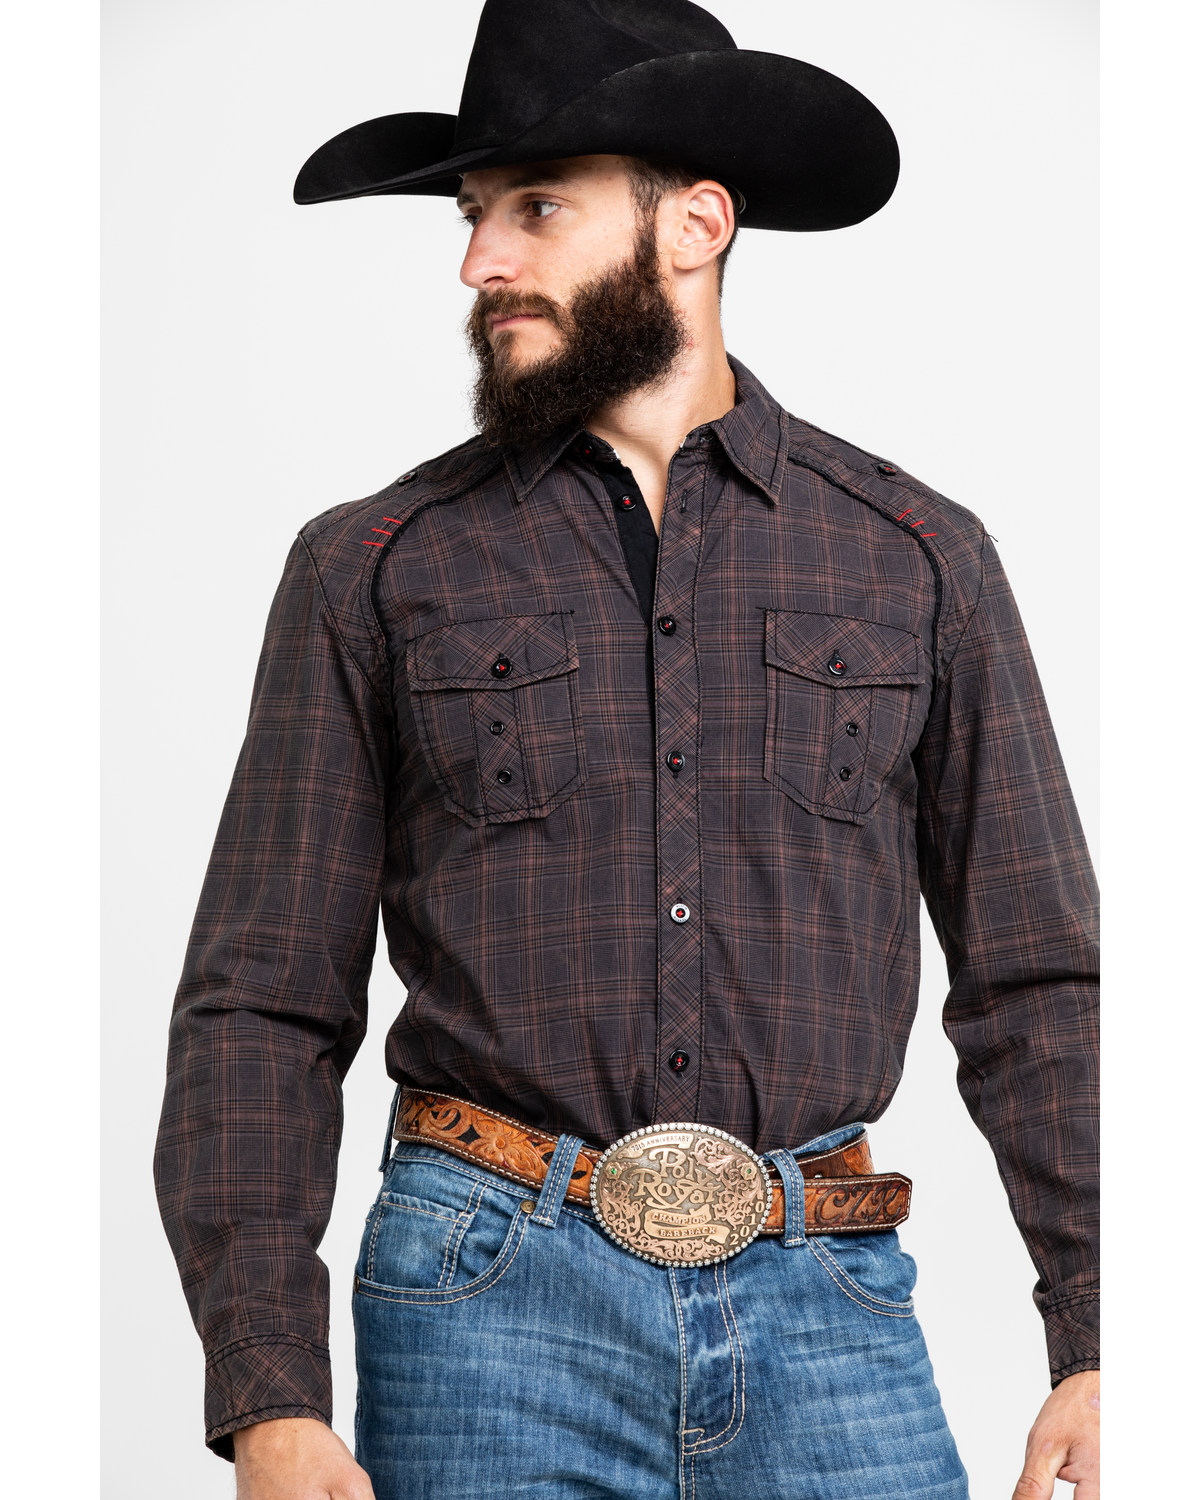 Austin Season Men's Embroidered Cross Plaid Print Button Long Sleeve Western Shirt